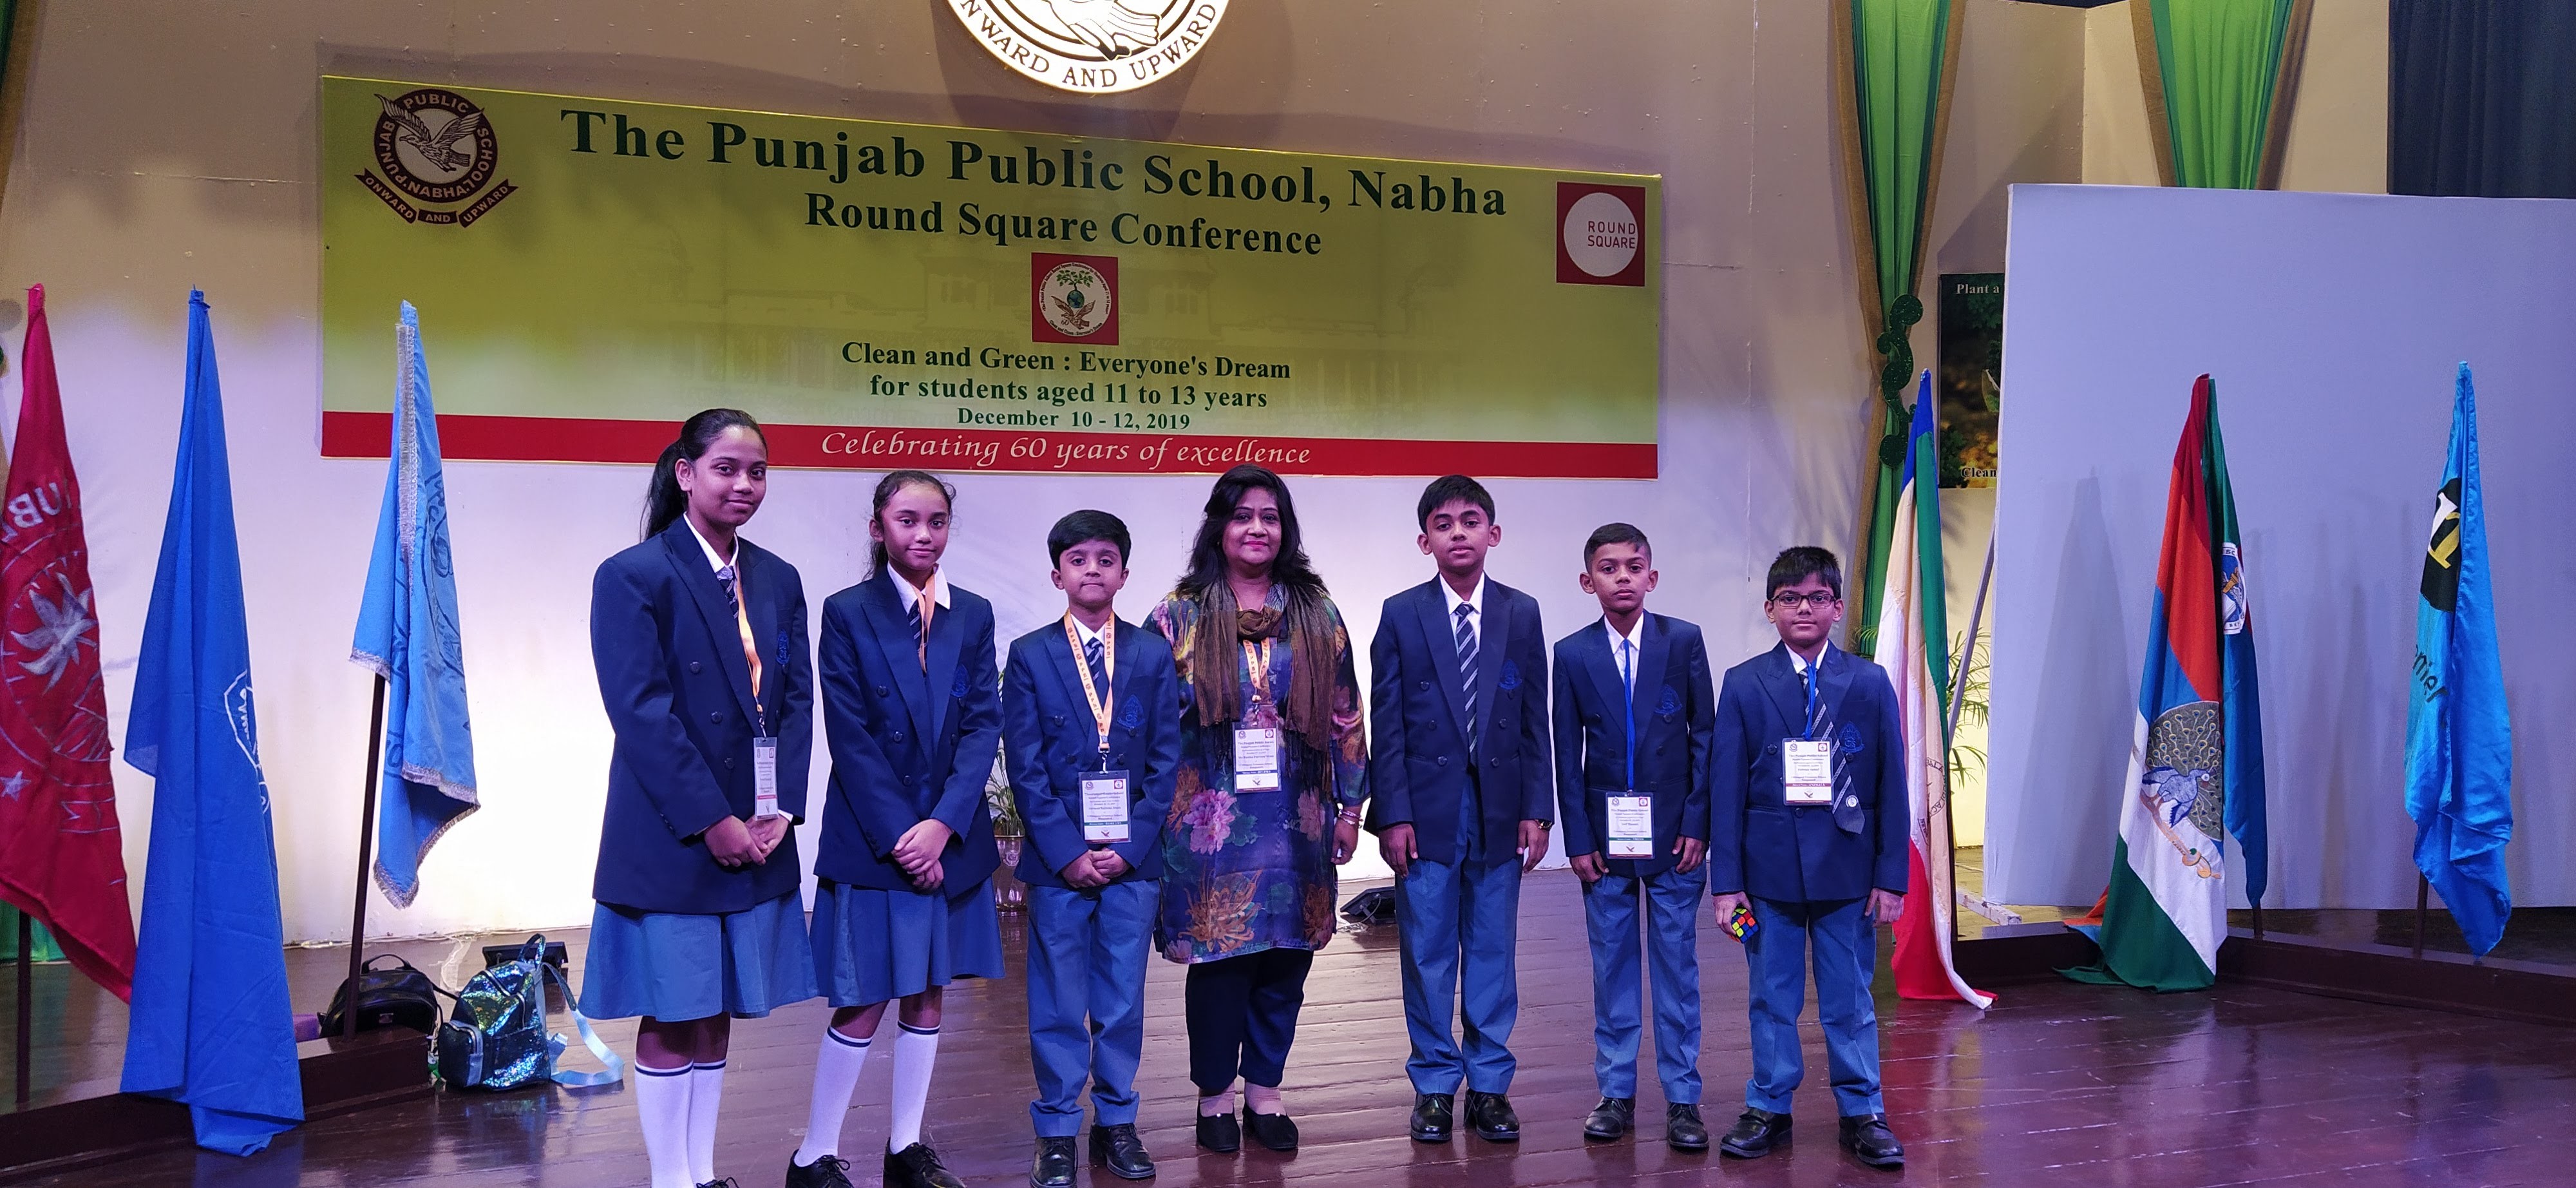 The Punjab Public School Round Square Conference 9-12 DEC 2019